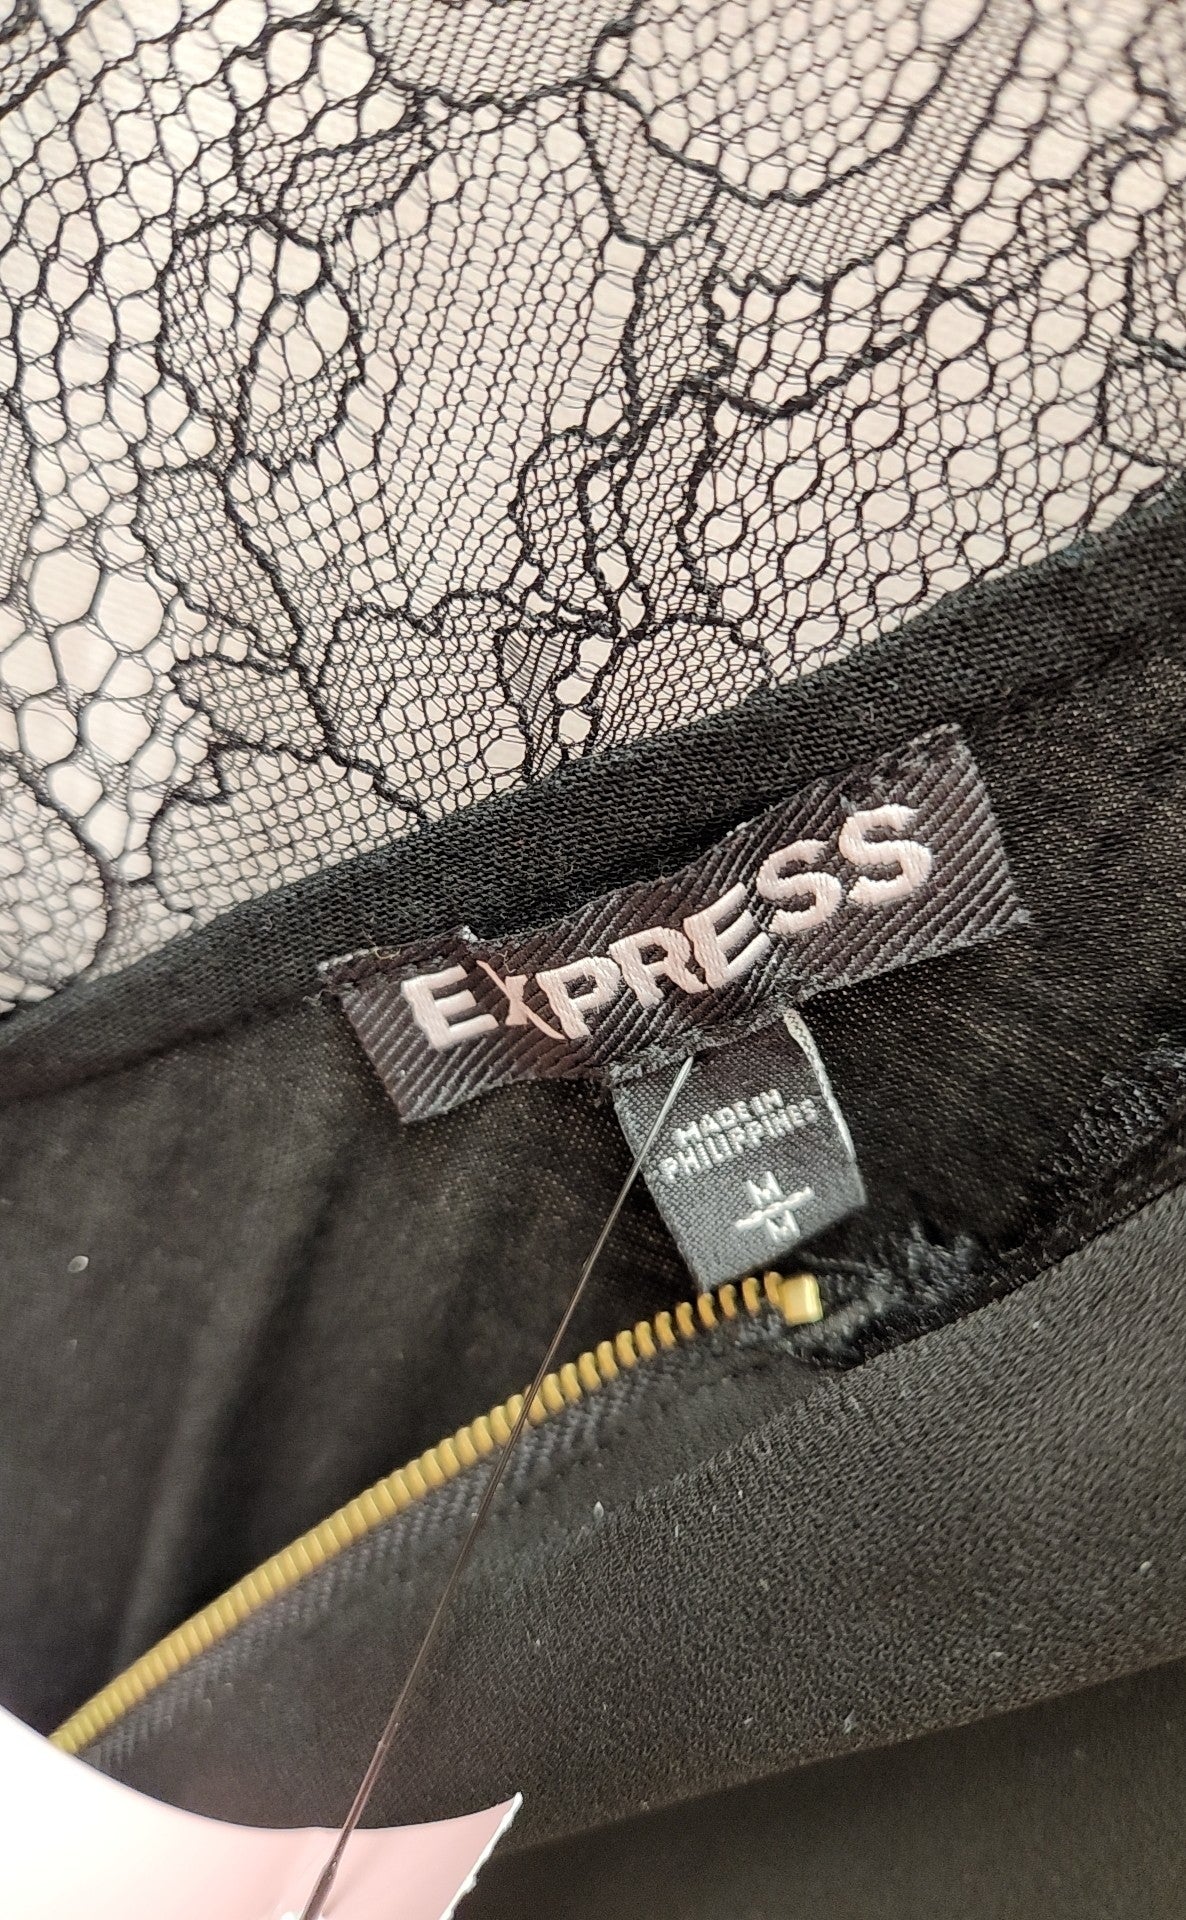 Express Women's Size M Black Sleeveless Top